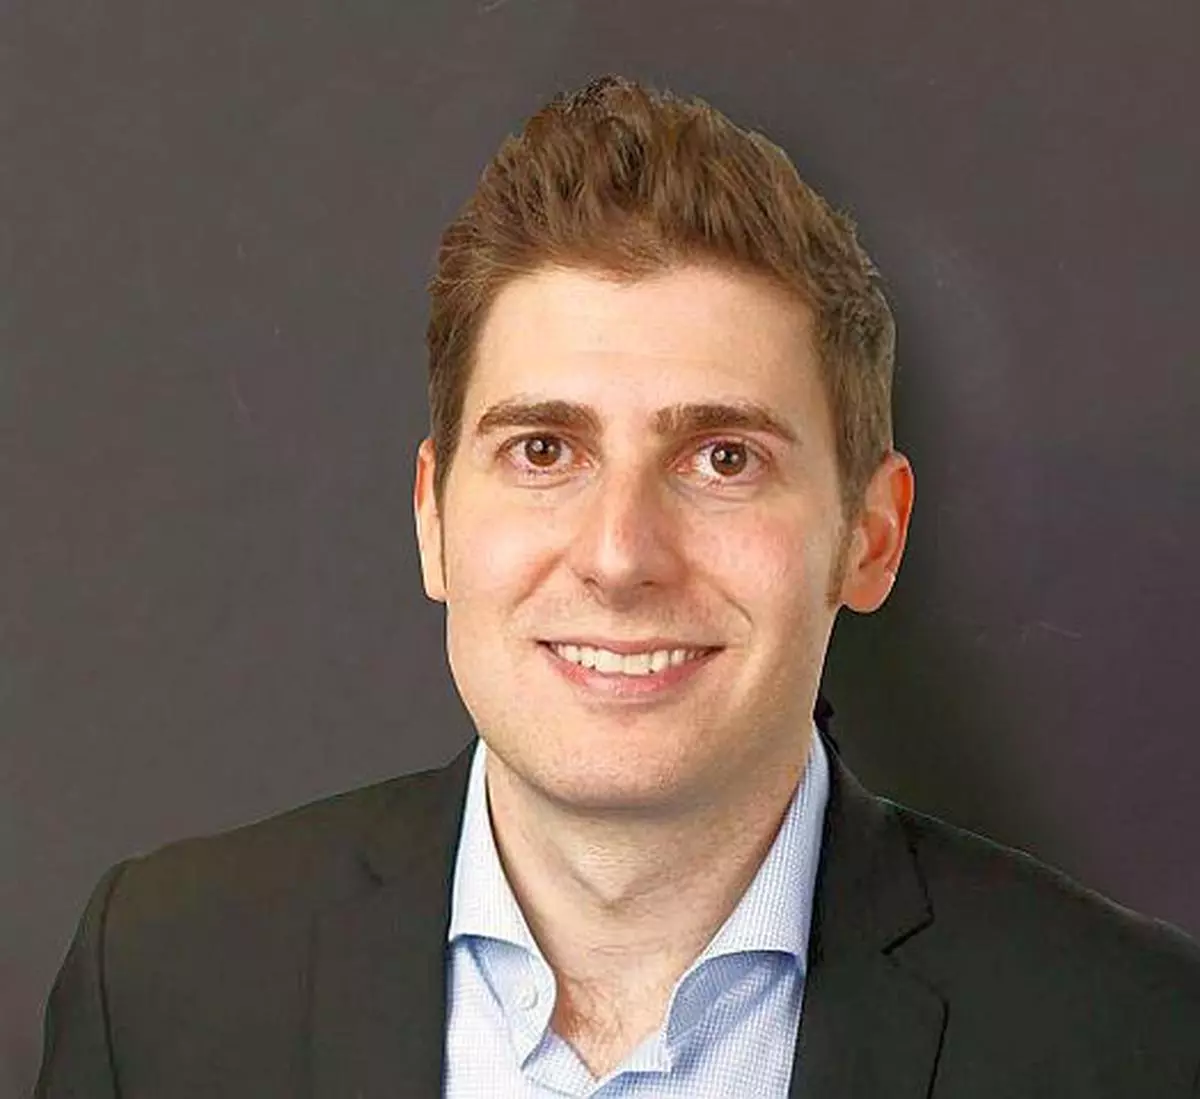 Eduardo Saverin, Co-Founder, Managing Partner at B Capital